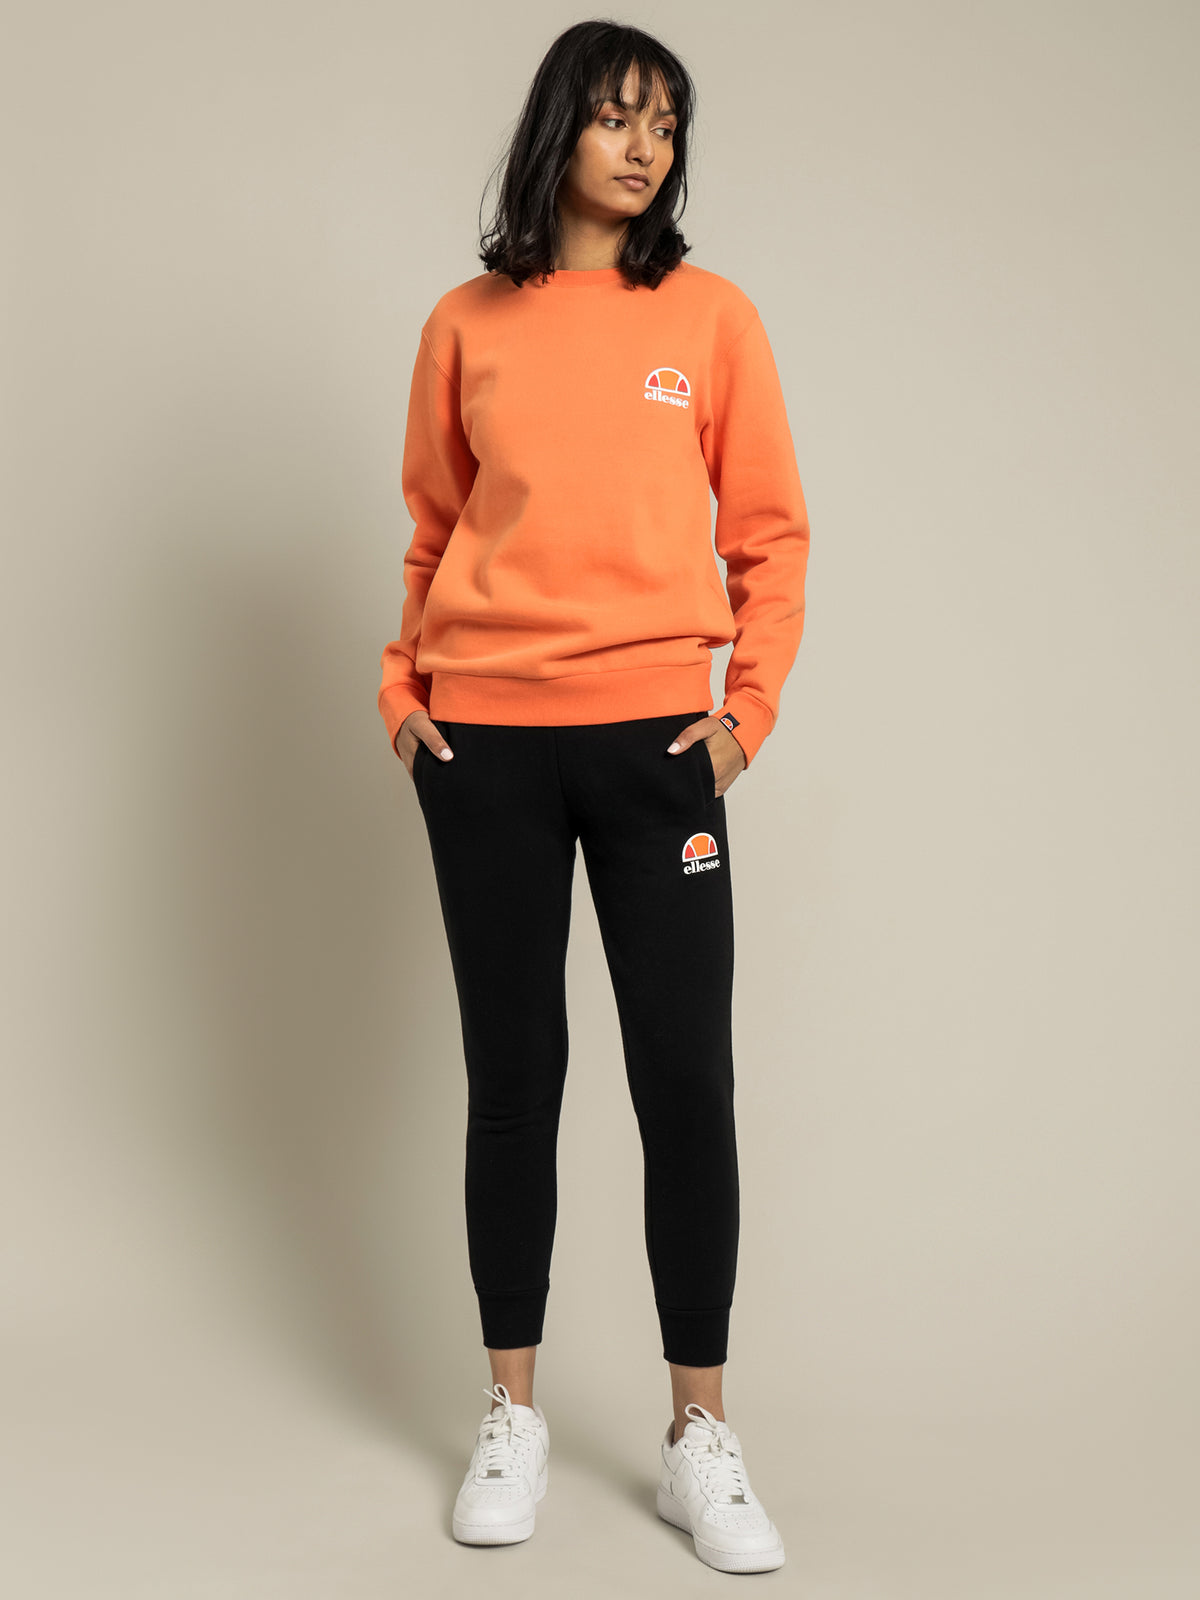 Haverford Sweatshirt in Orange